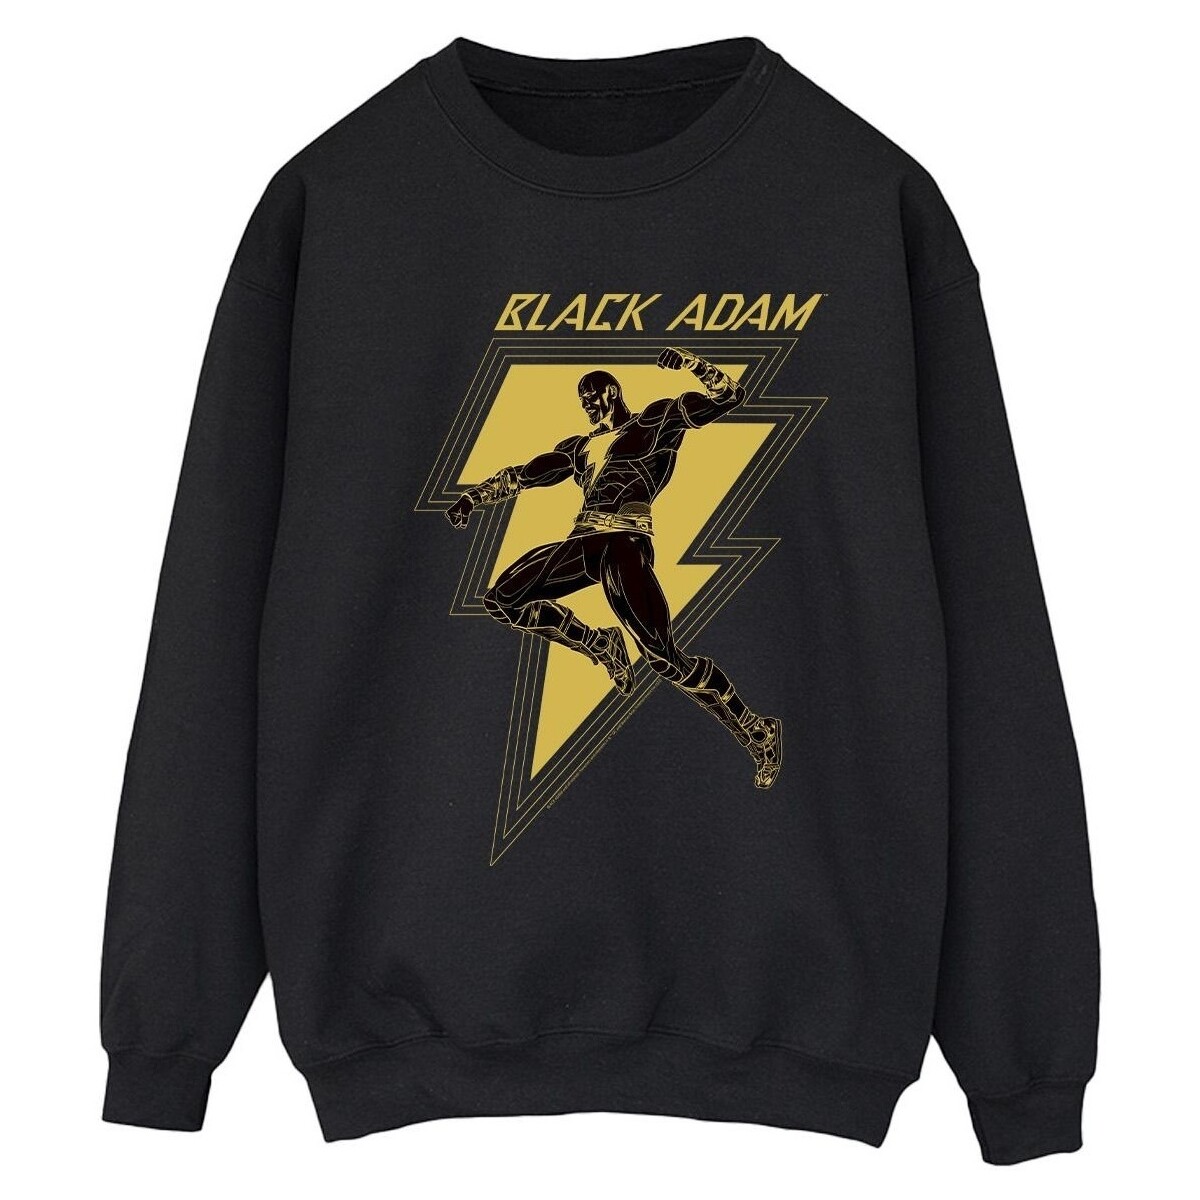 textil Mujer Sudaderas Dc Comics Black Adam Golden Bolt Chest Negro